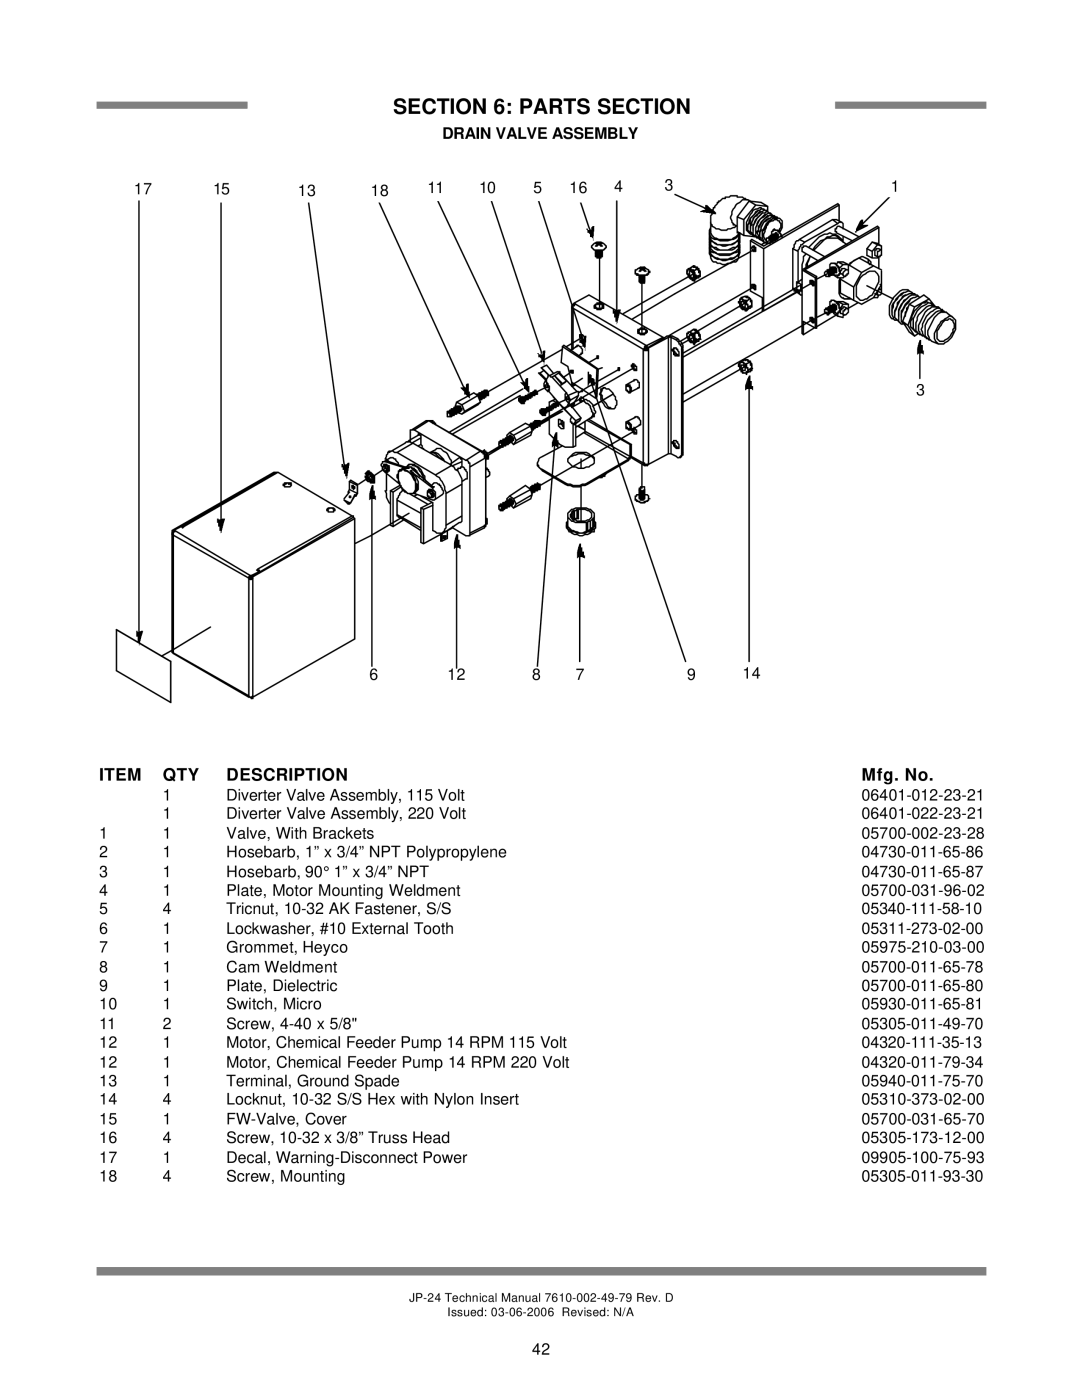 Jackson JP-24F, jp-24b, JP-24BF technical manual Parts Section, Drain Valve Assembly, Description, Mfg. No 